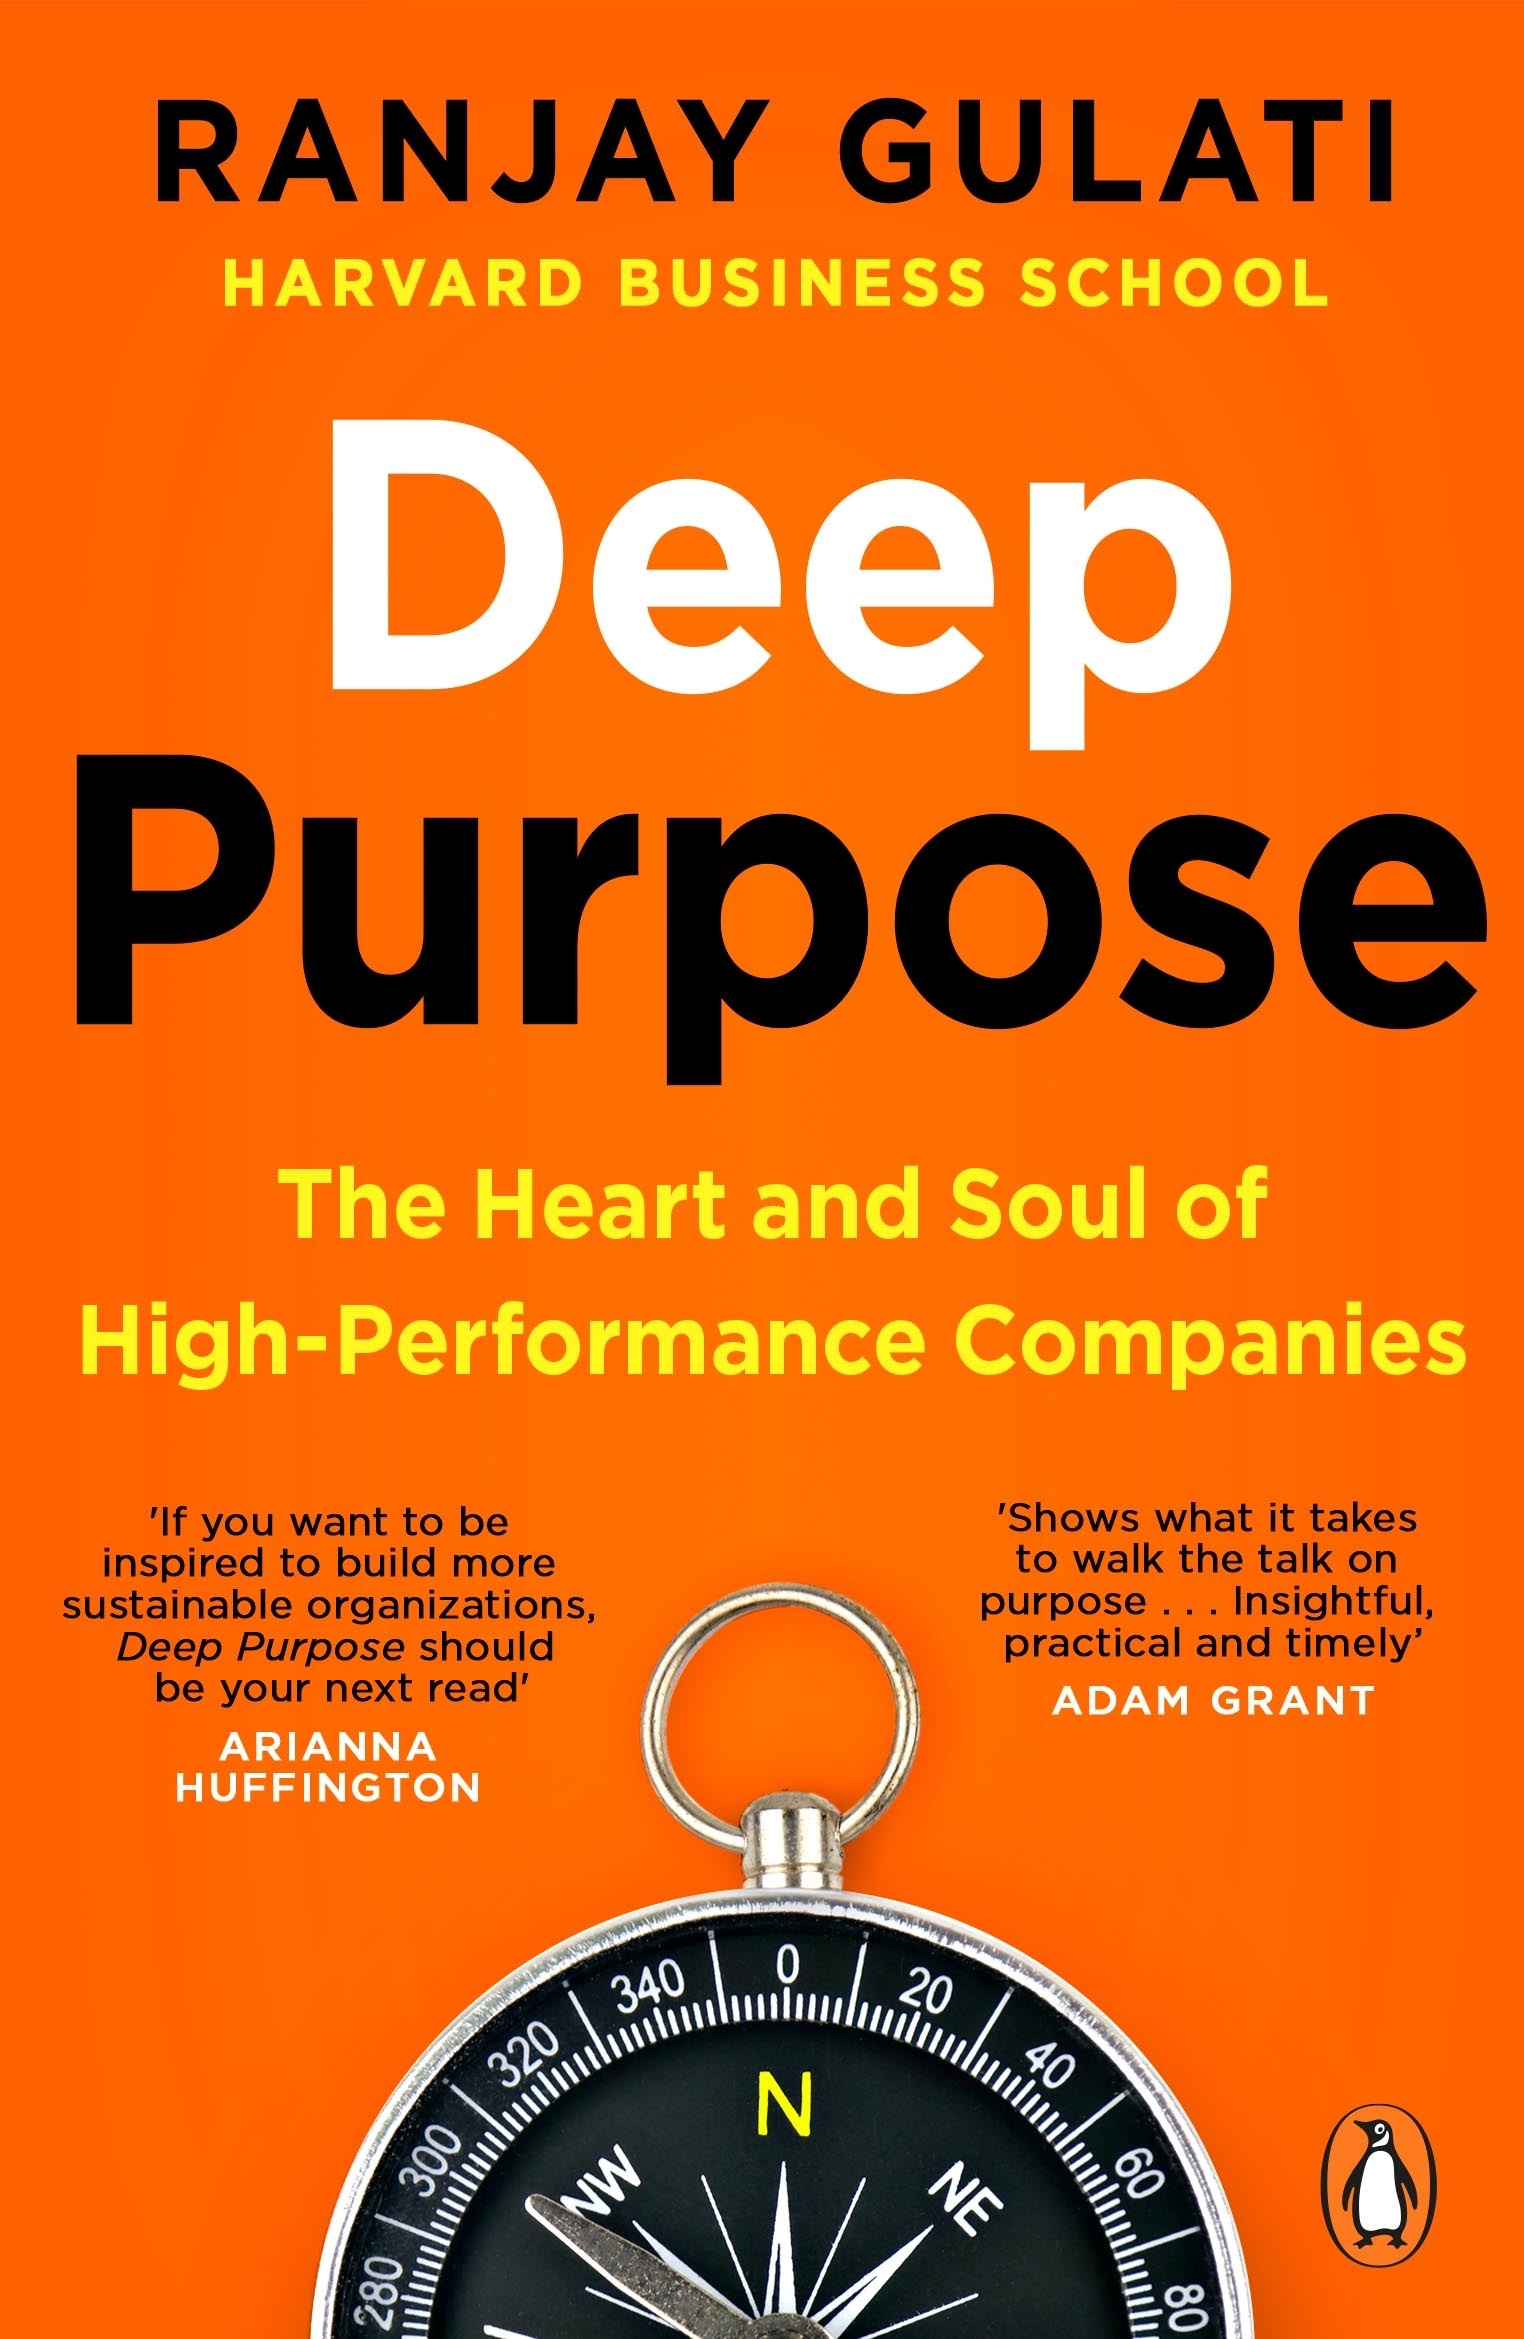 Book “Deep Purpose” by Ranjay Gulati — February 9, 2023